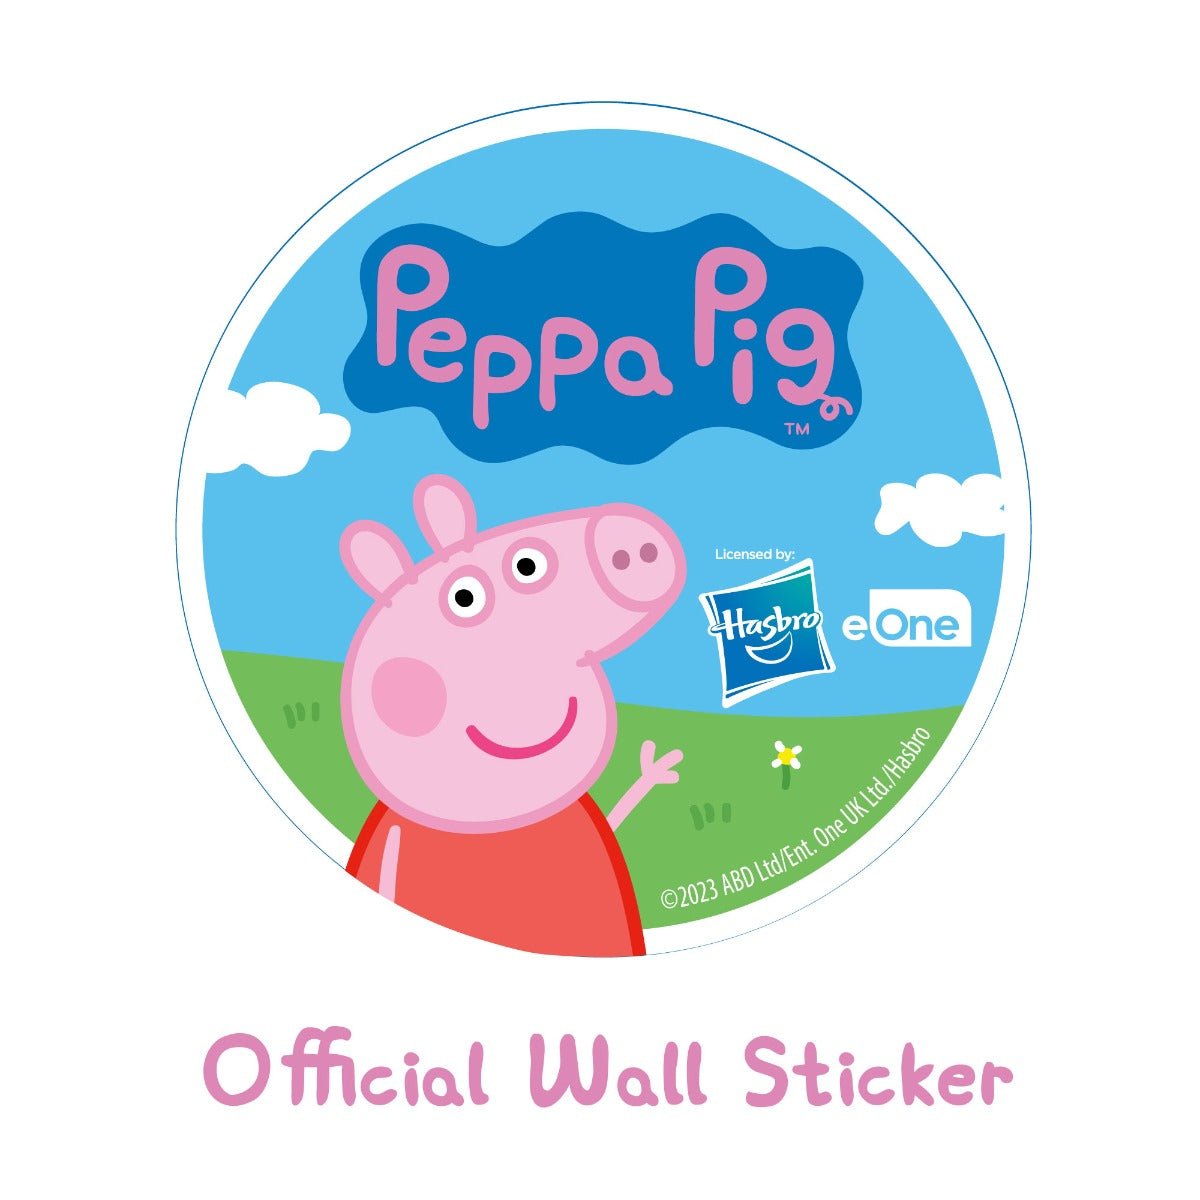 Peppa Pig Wall Sticker - Peppa Pig and Friends Party Broken Wall Decal Kids Art